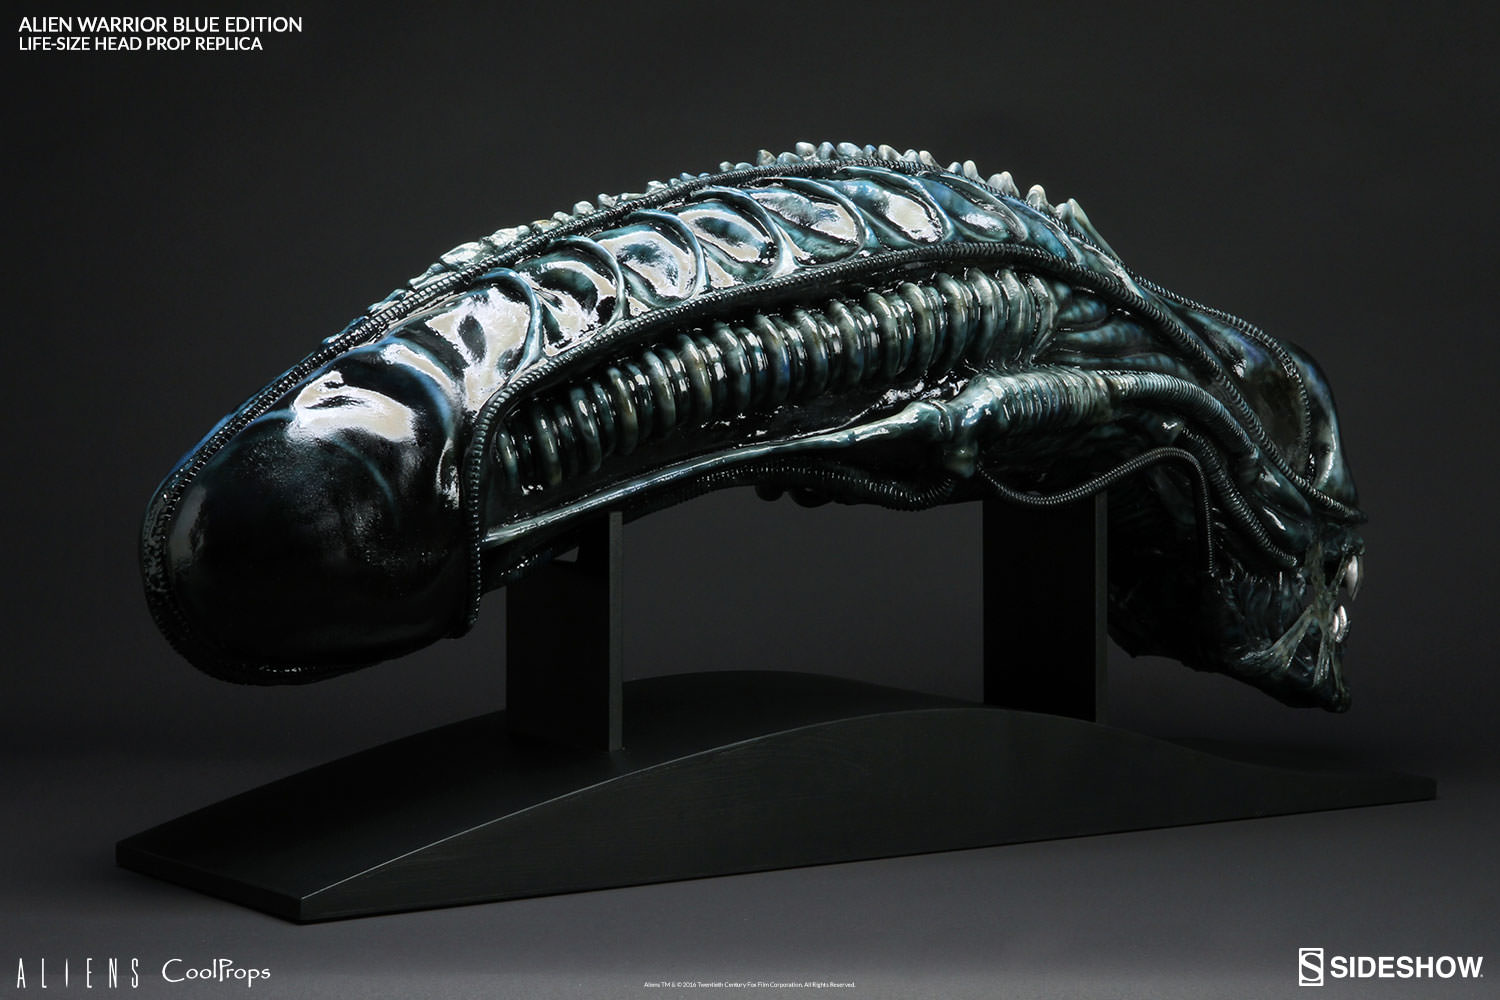 Alien Warrior Blue Edition Life-Size Head- Prototype Shown